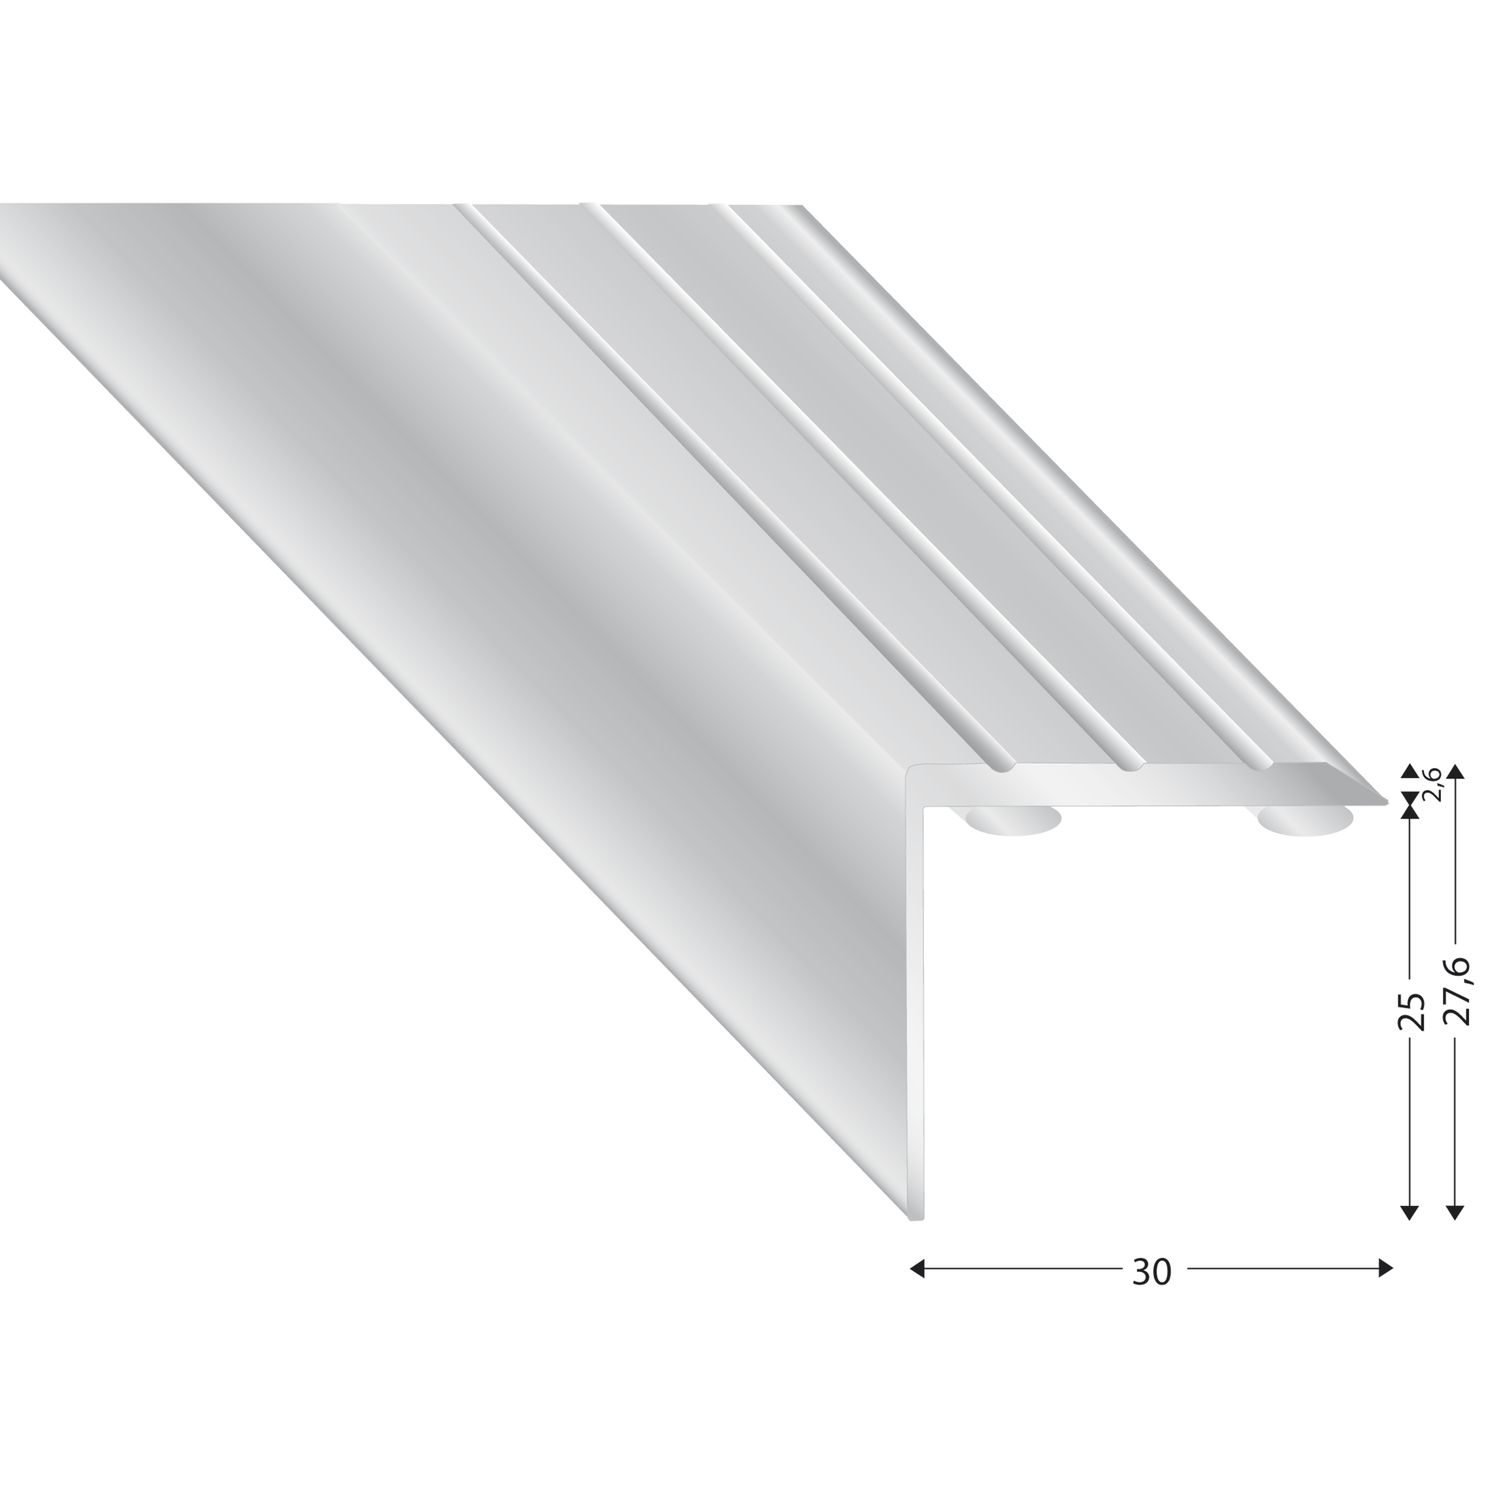 KÜGELE Winkelprofil Alu silber, selbstklebend, 30 x 25 mm, 2700 mm